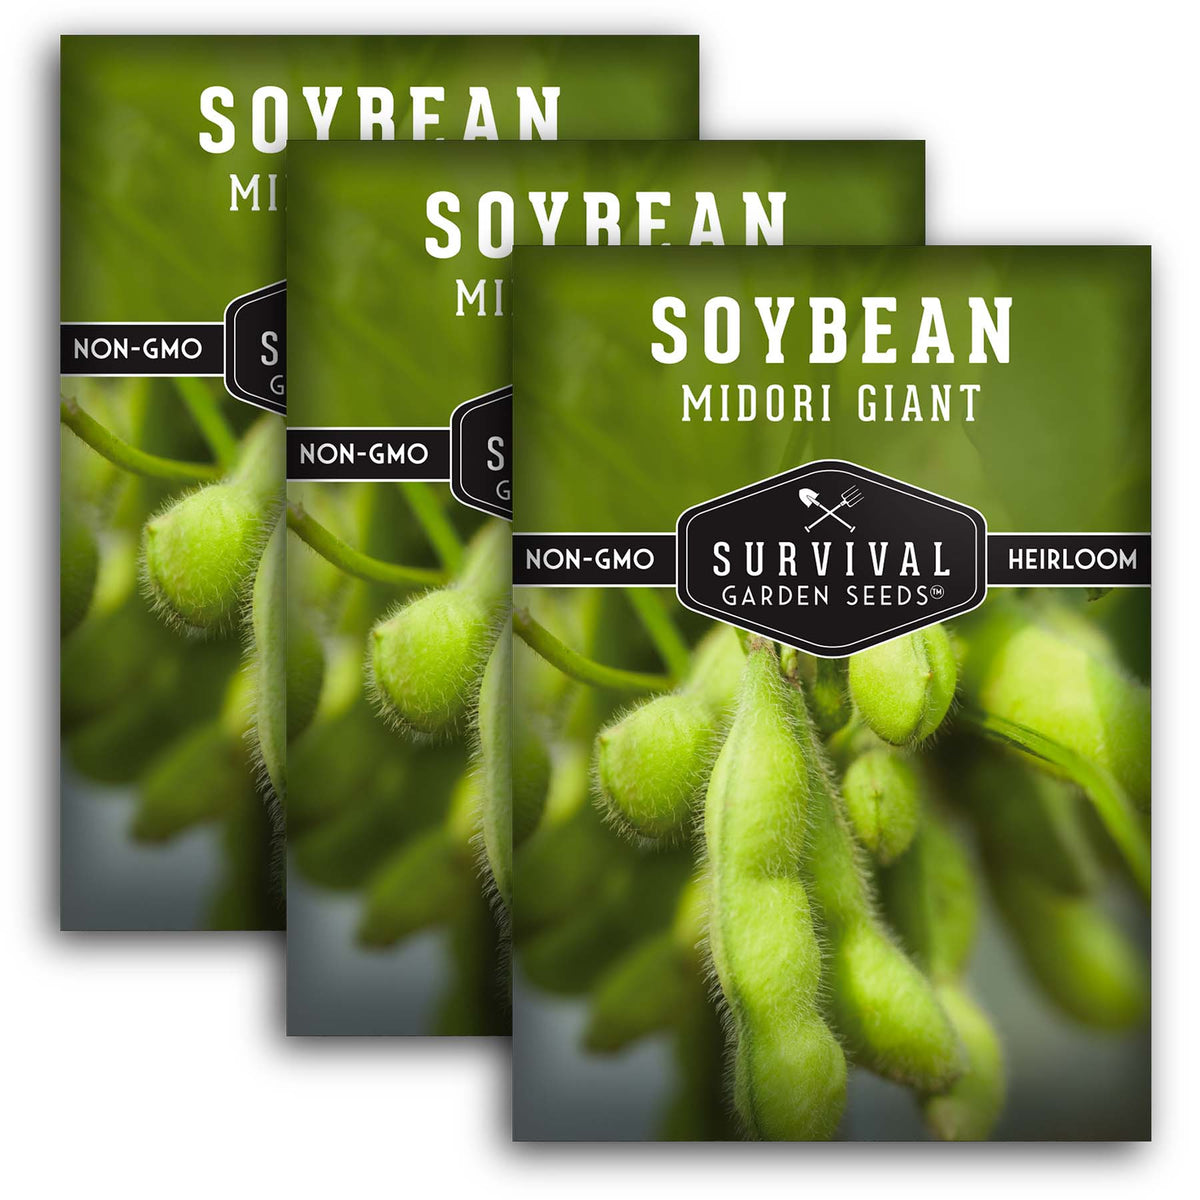 Midori Giant Soybean Seeds